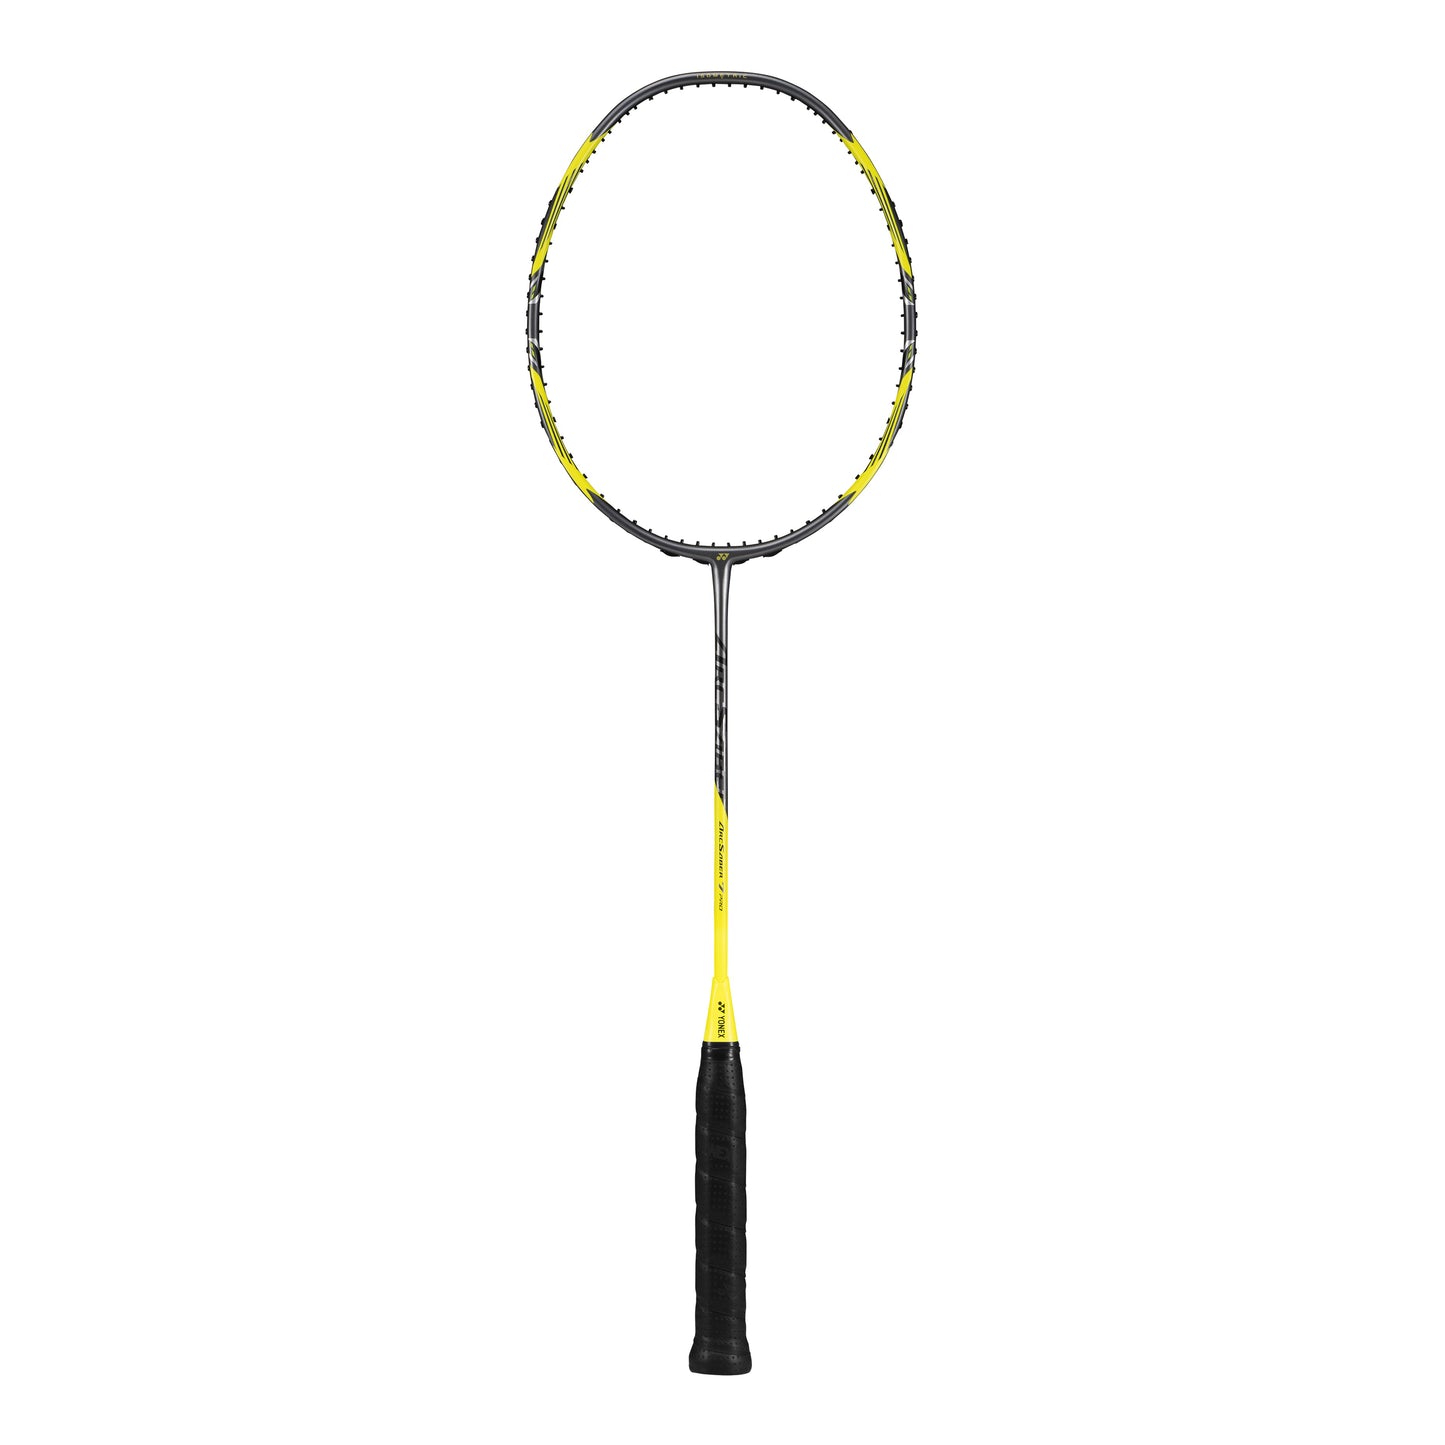 Yonex Arcsaber 7 Pro Badminton Racquet, Grey/Yellow (4UG5) - Best Price online Prokicksports.com